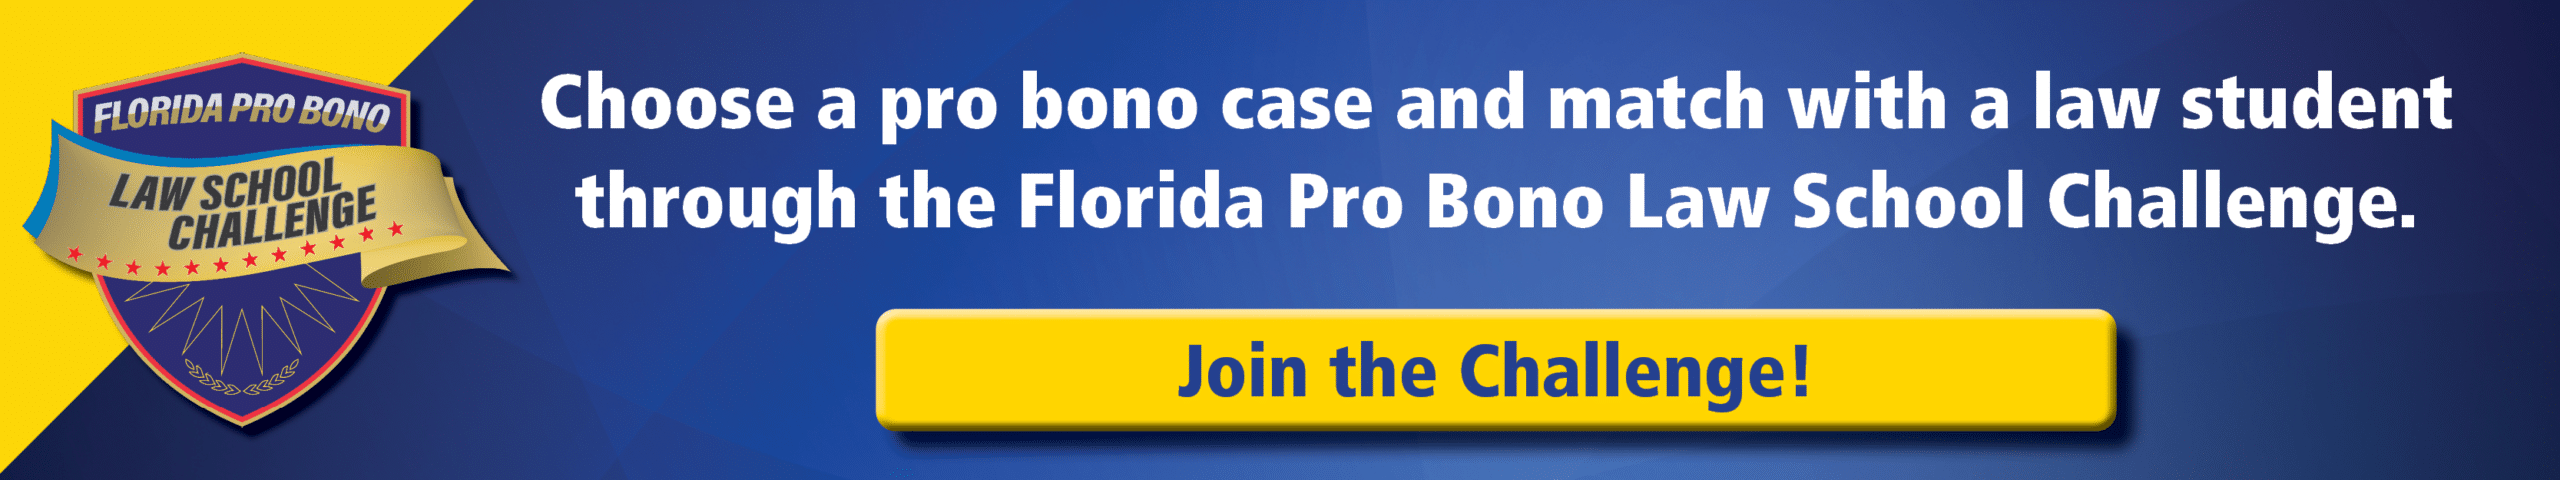 Join the florida pro bono challenge now